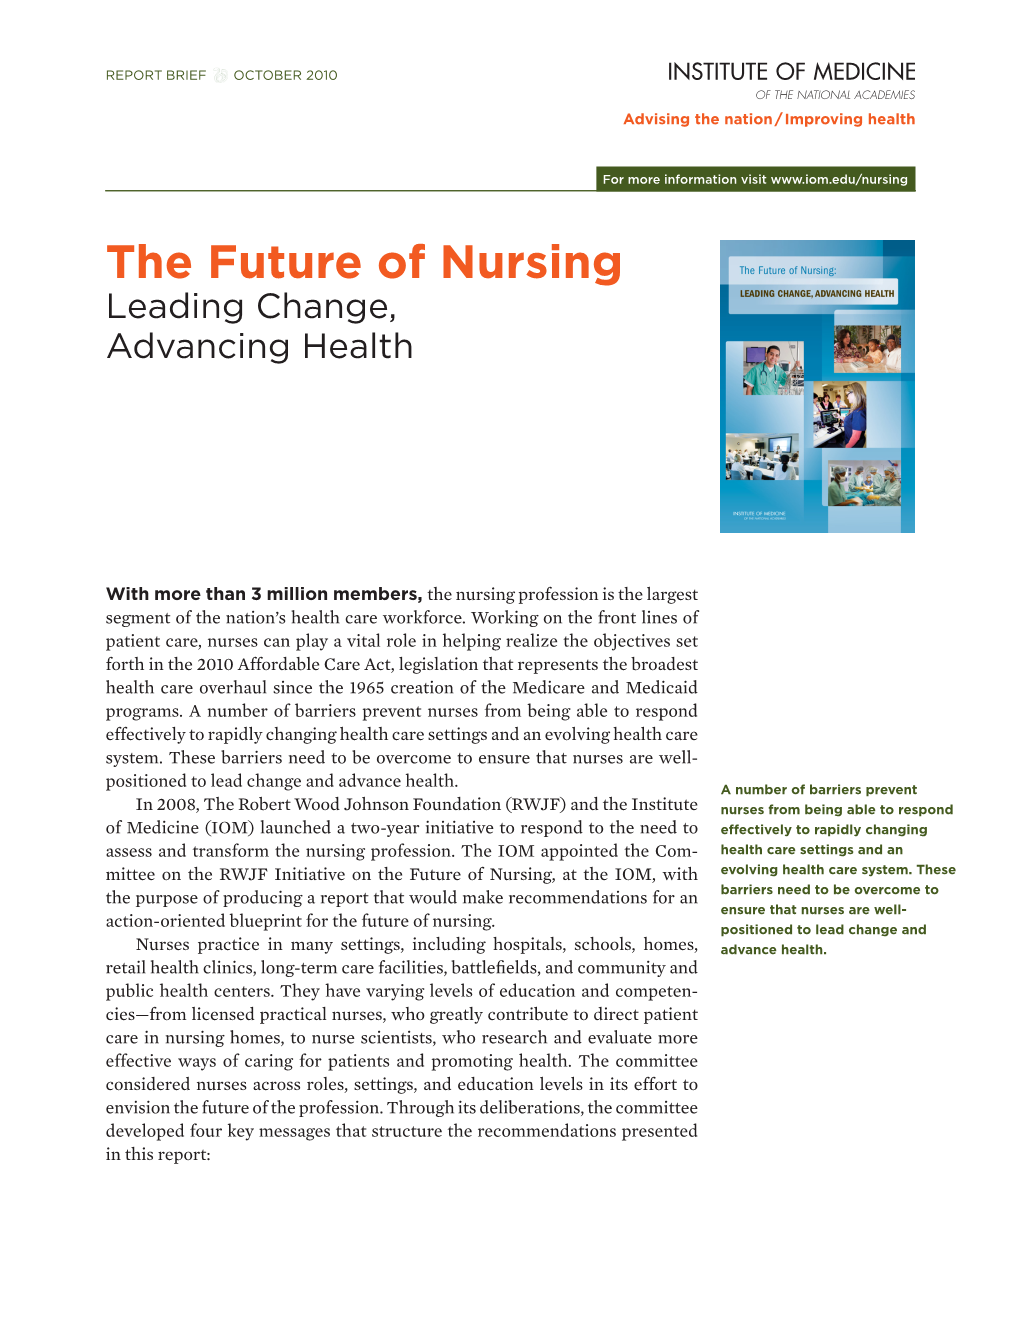 The Future of Nursing Leading Change, Advancing Health